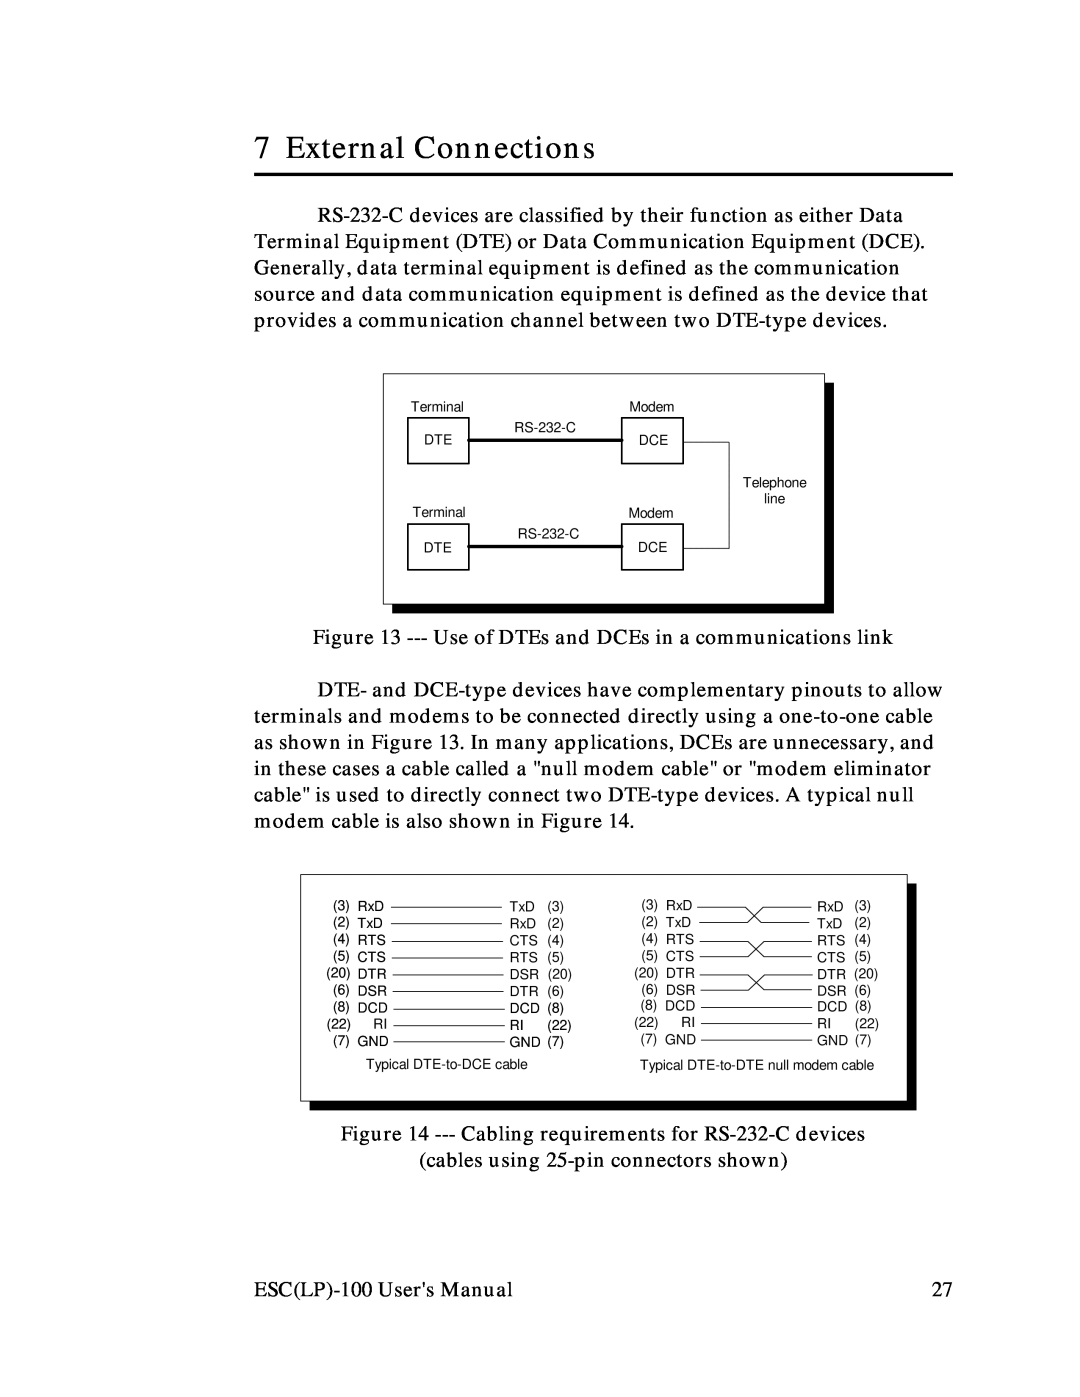 Quatech RS-232 user manual External Connections 